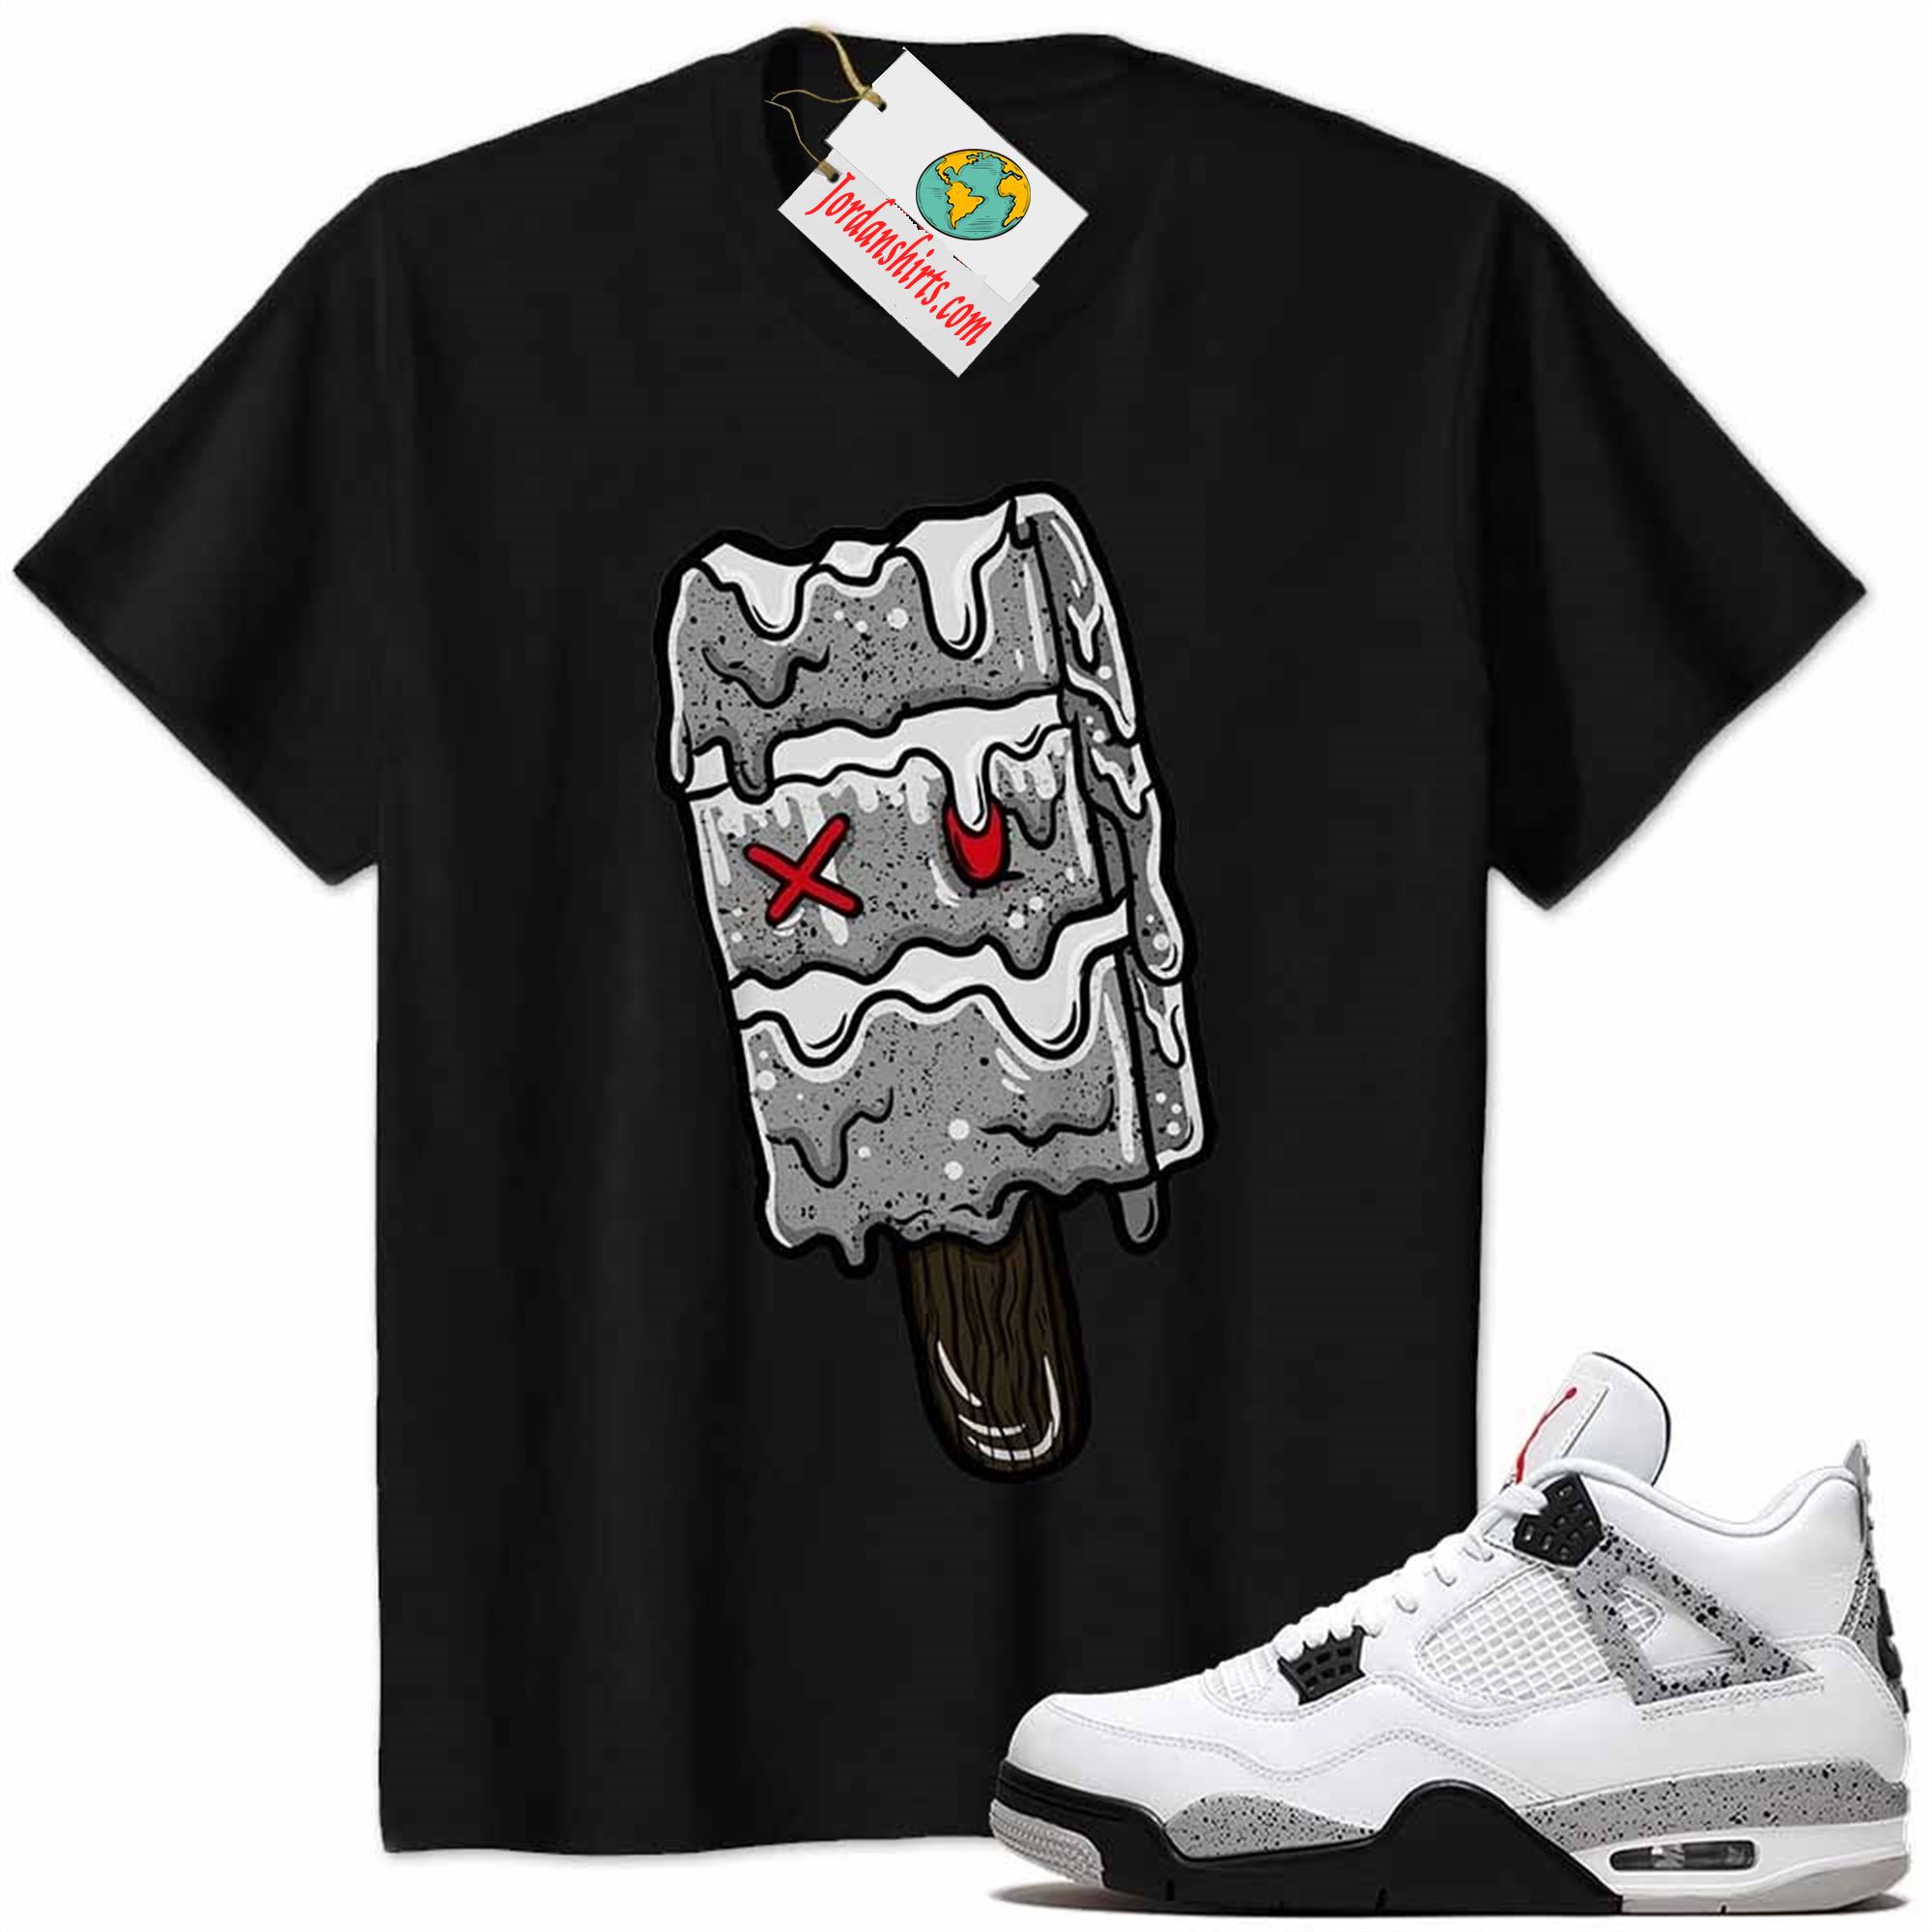 Jordan 4 Shirt, Ice Cream Dripping Black Air Jordan 4 Cement 4s Full Size Up To 5xl